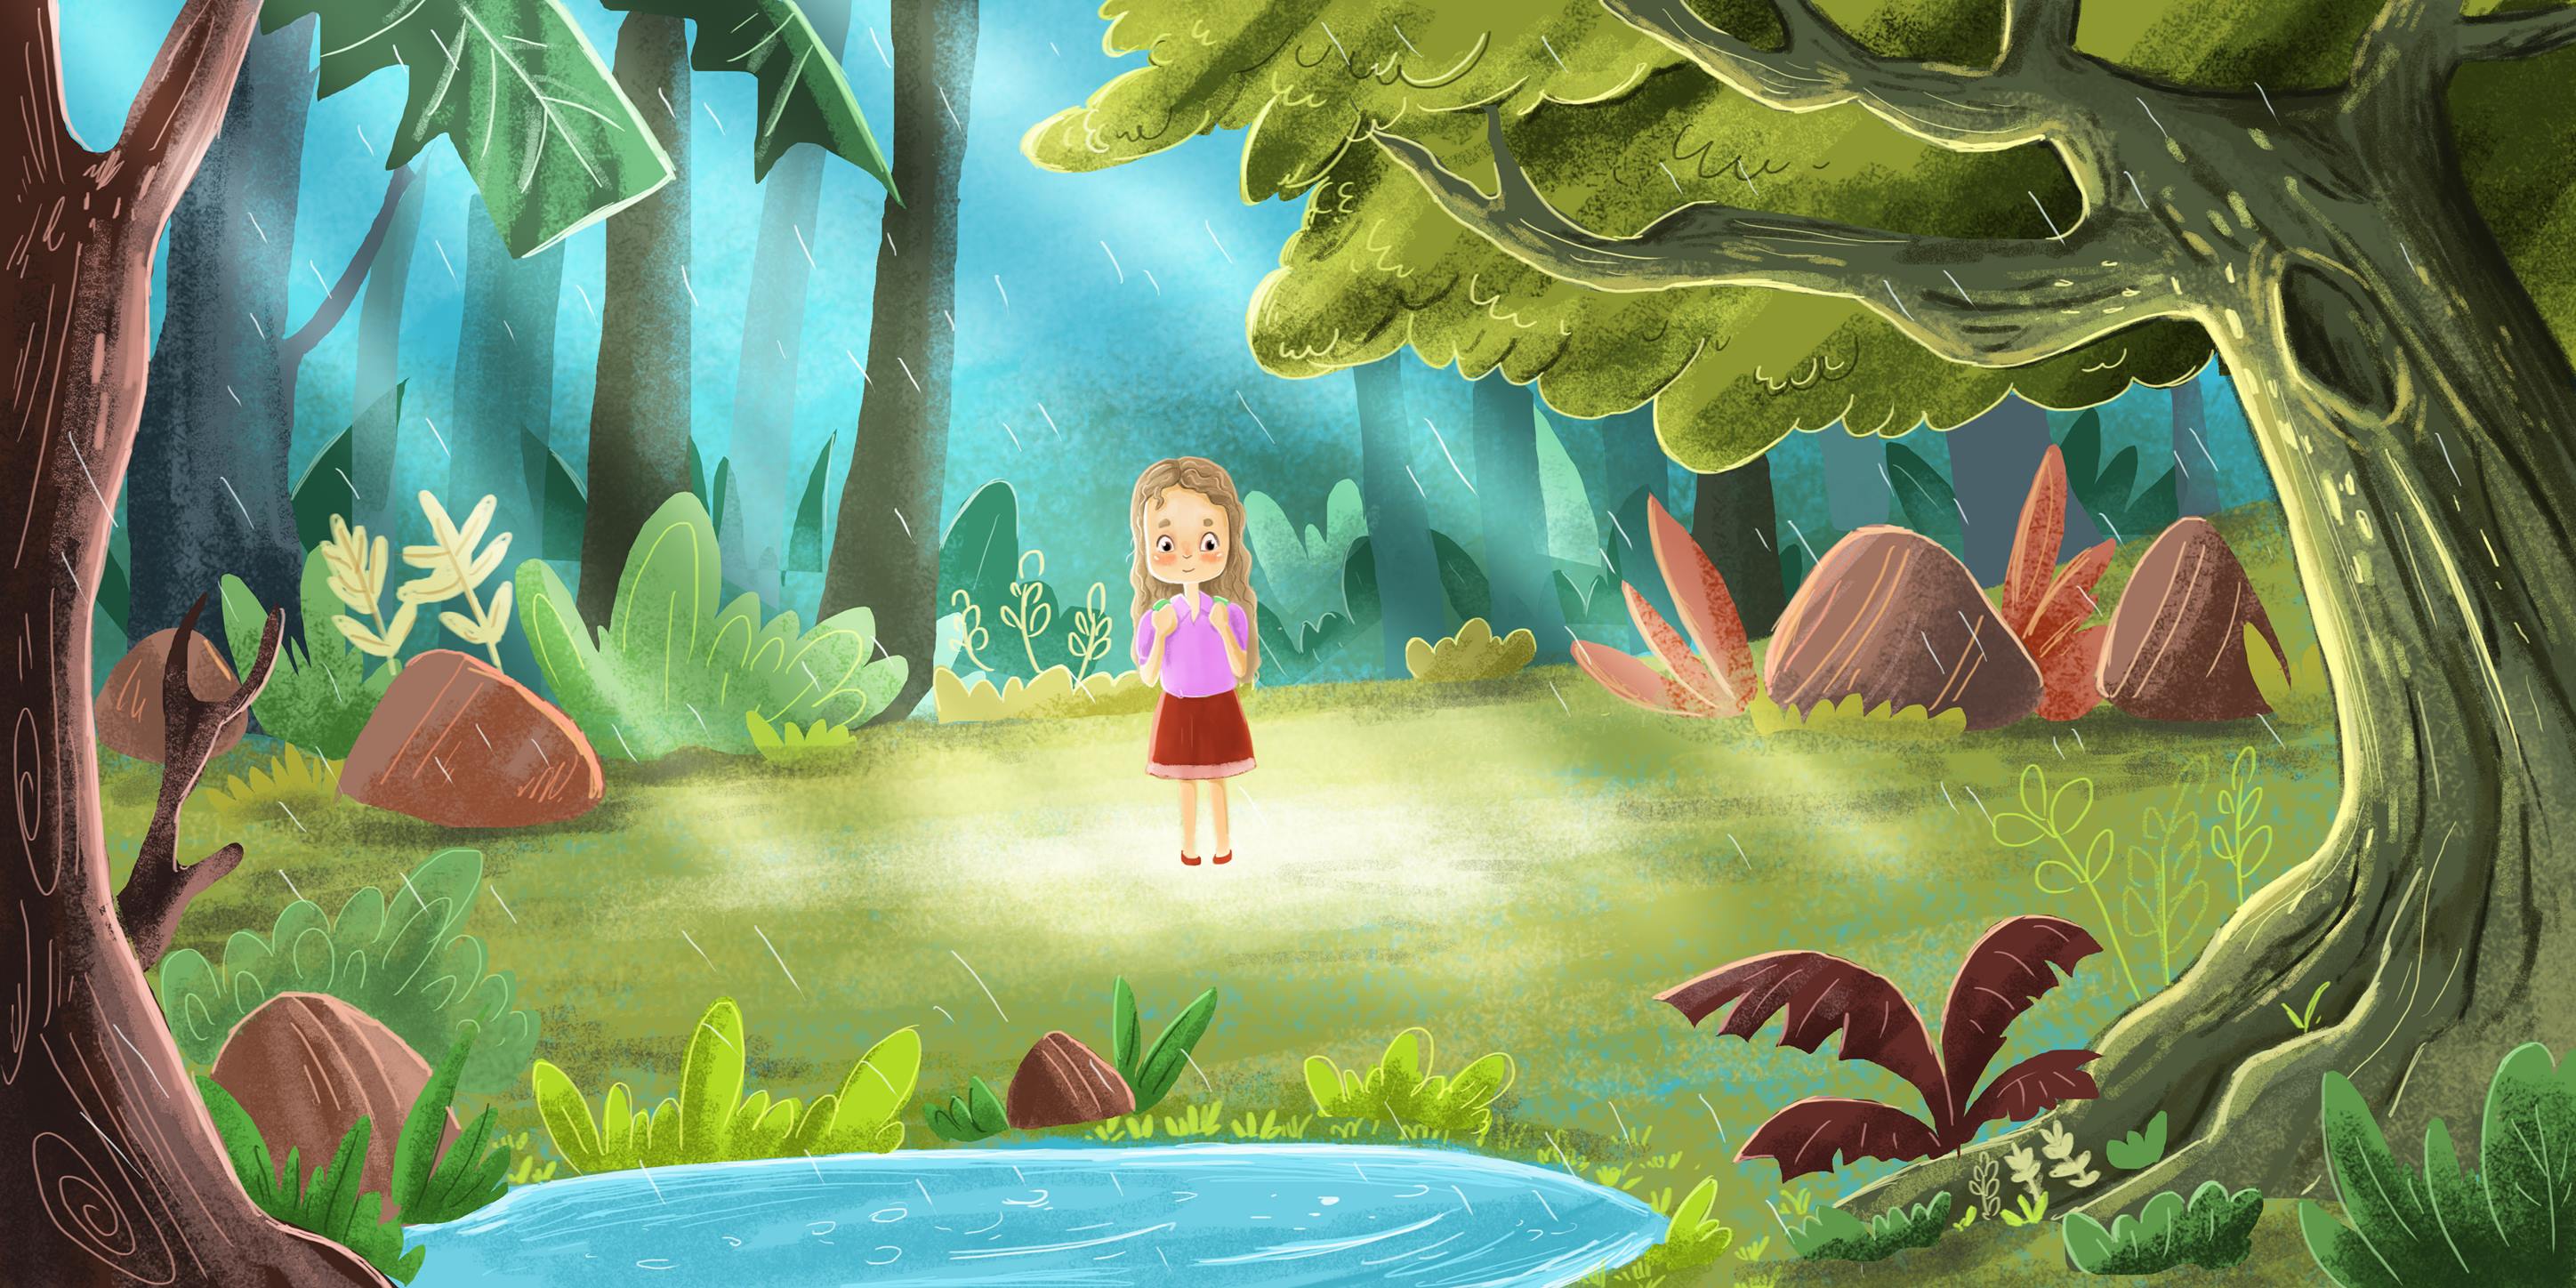 Girl in forest illustration by Nejla Shojaie